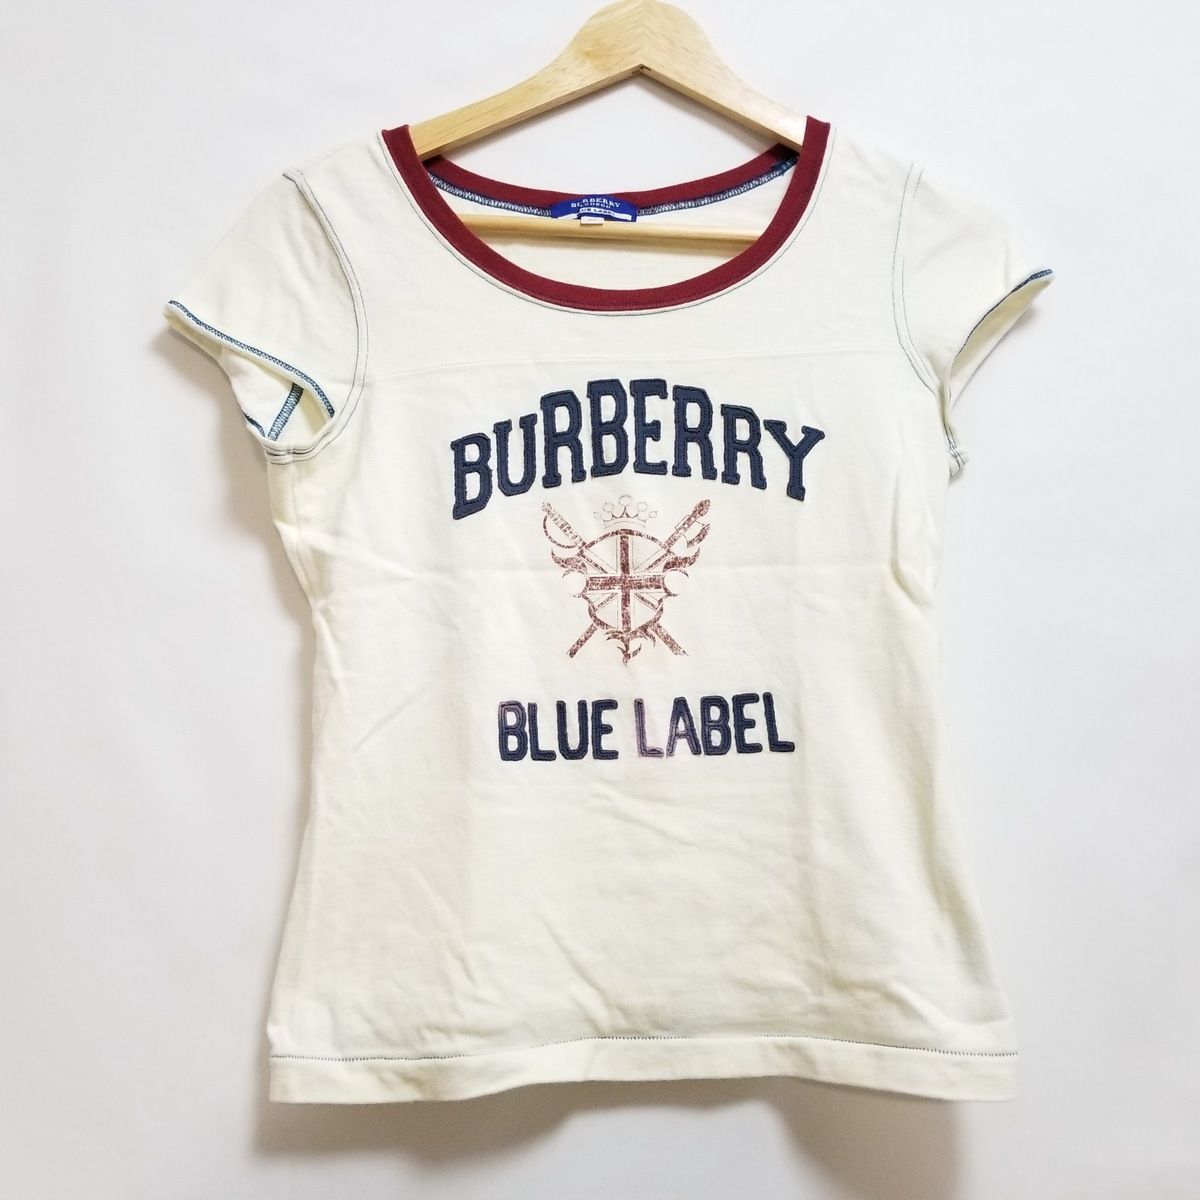 Burberry Blue Label(バーバリーブルーレーベル) 半袖Tシャツ サイズ38